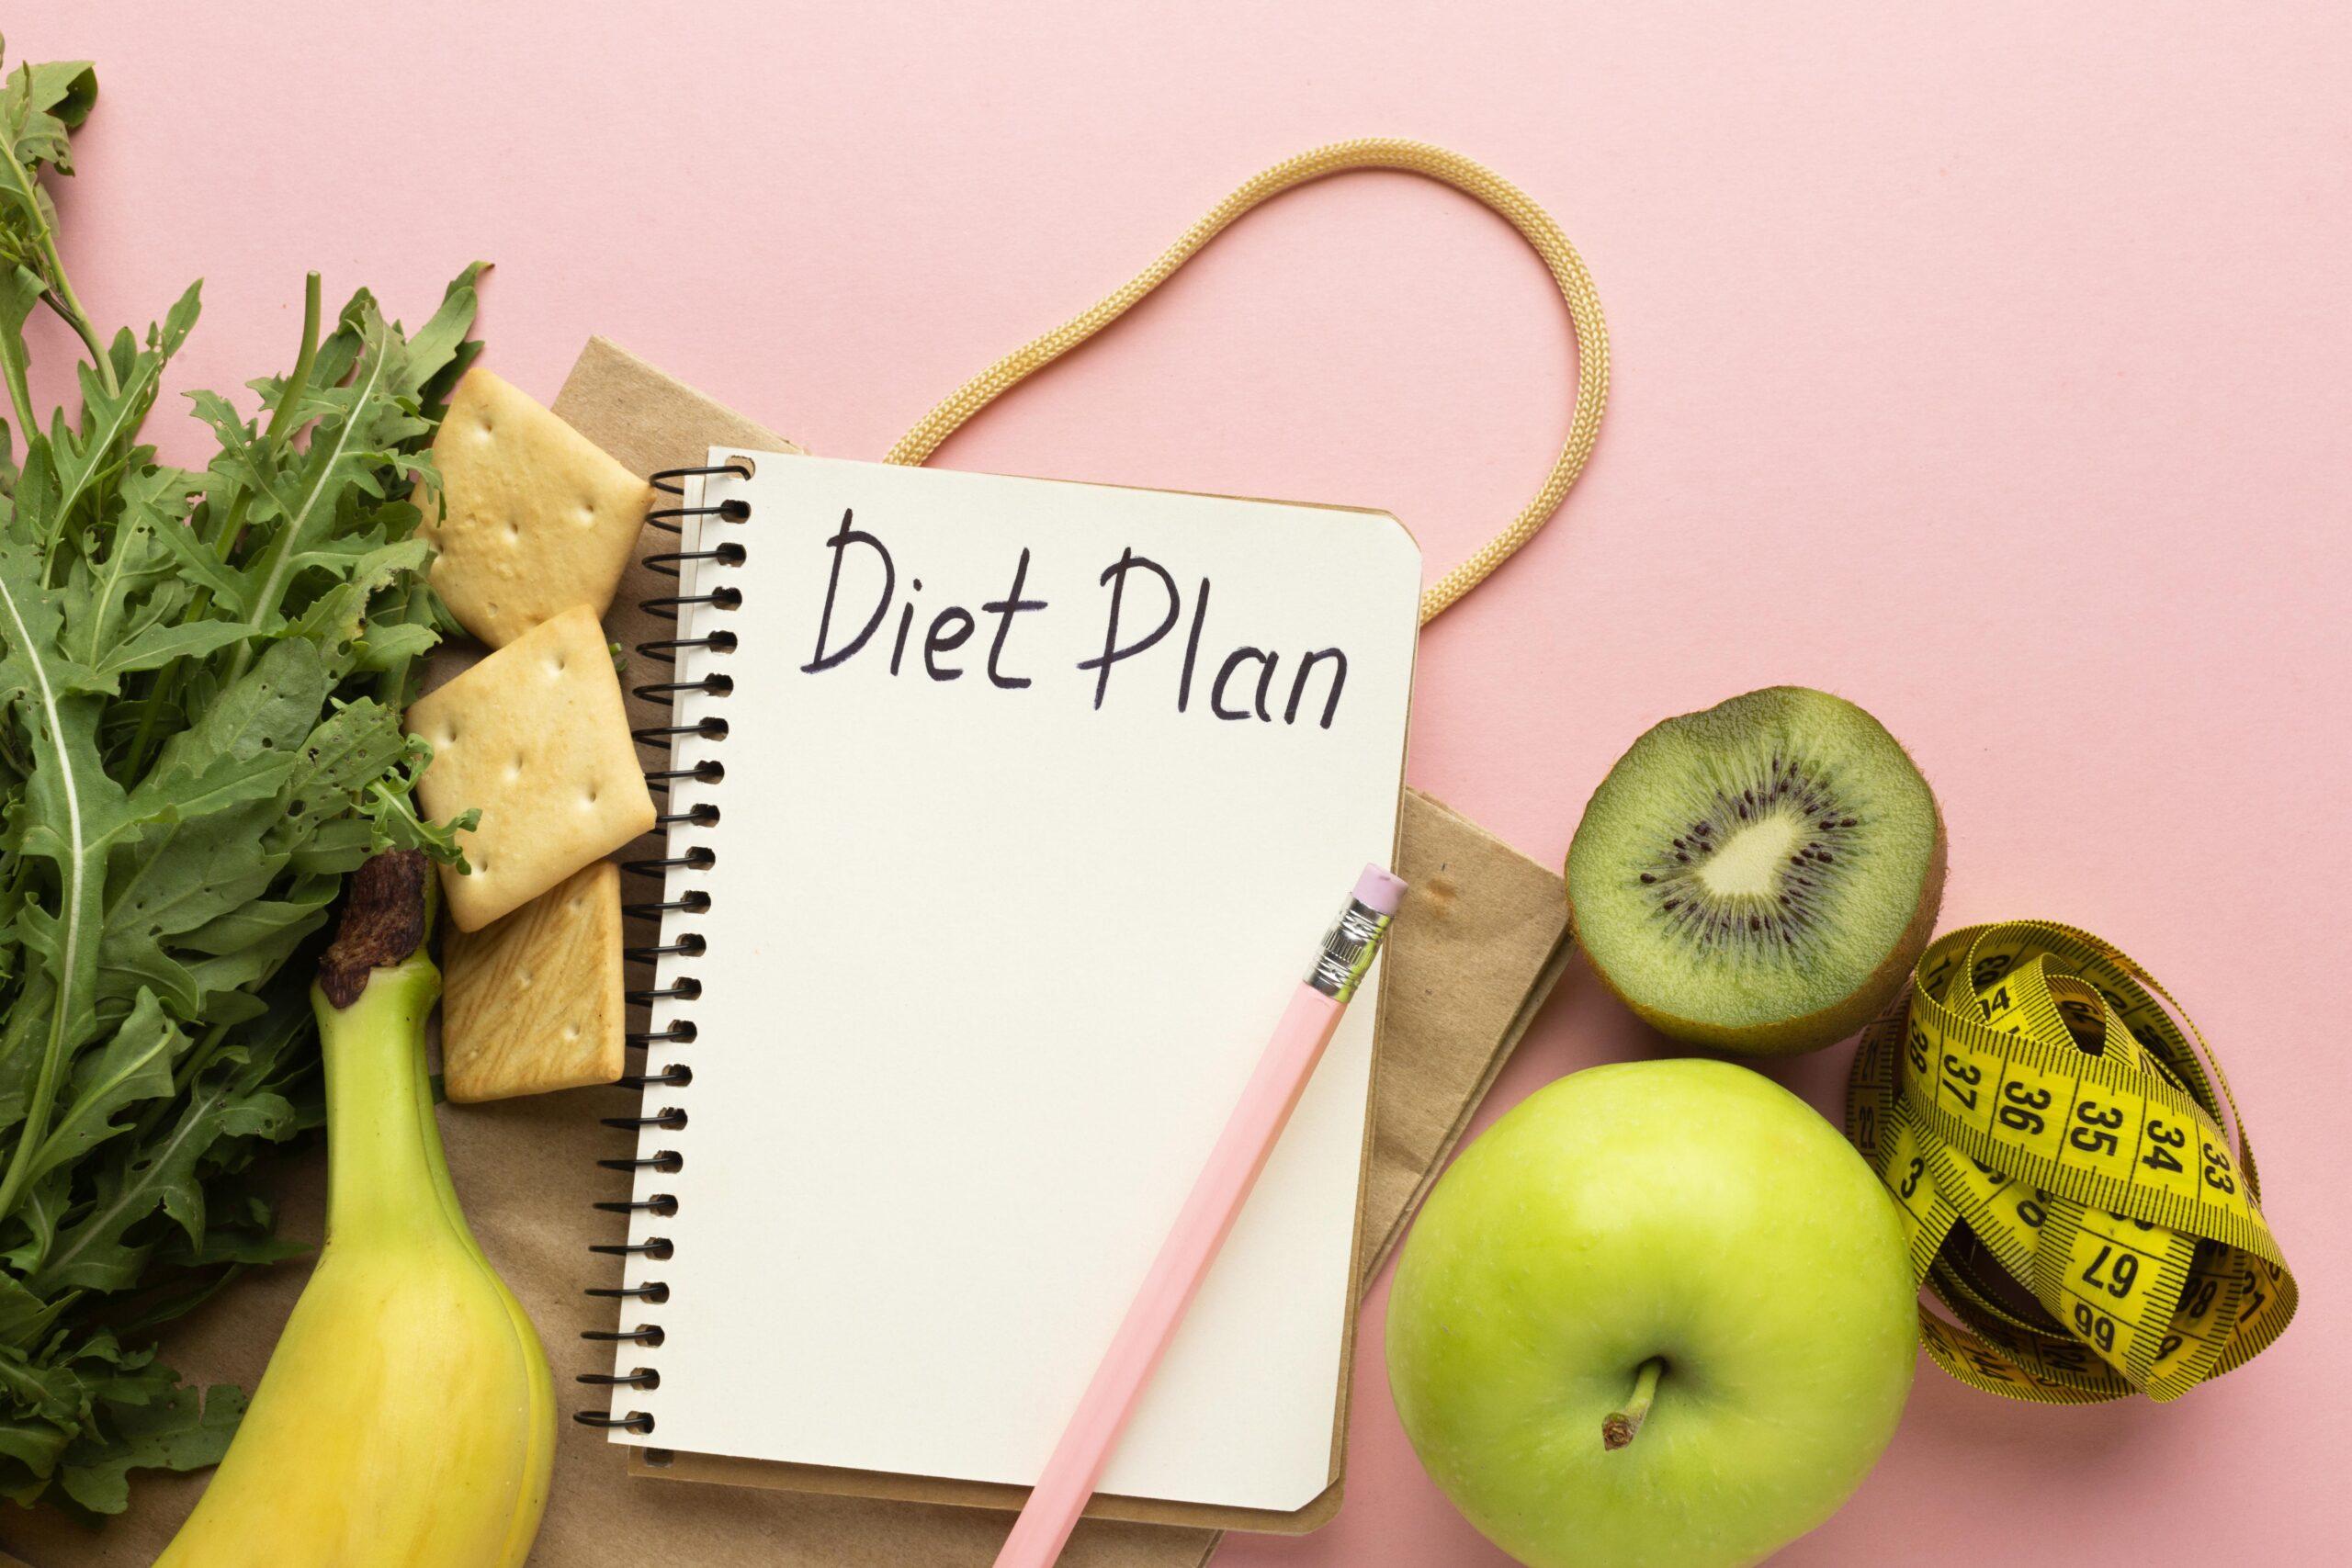 Diet Advice for Optimal Health